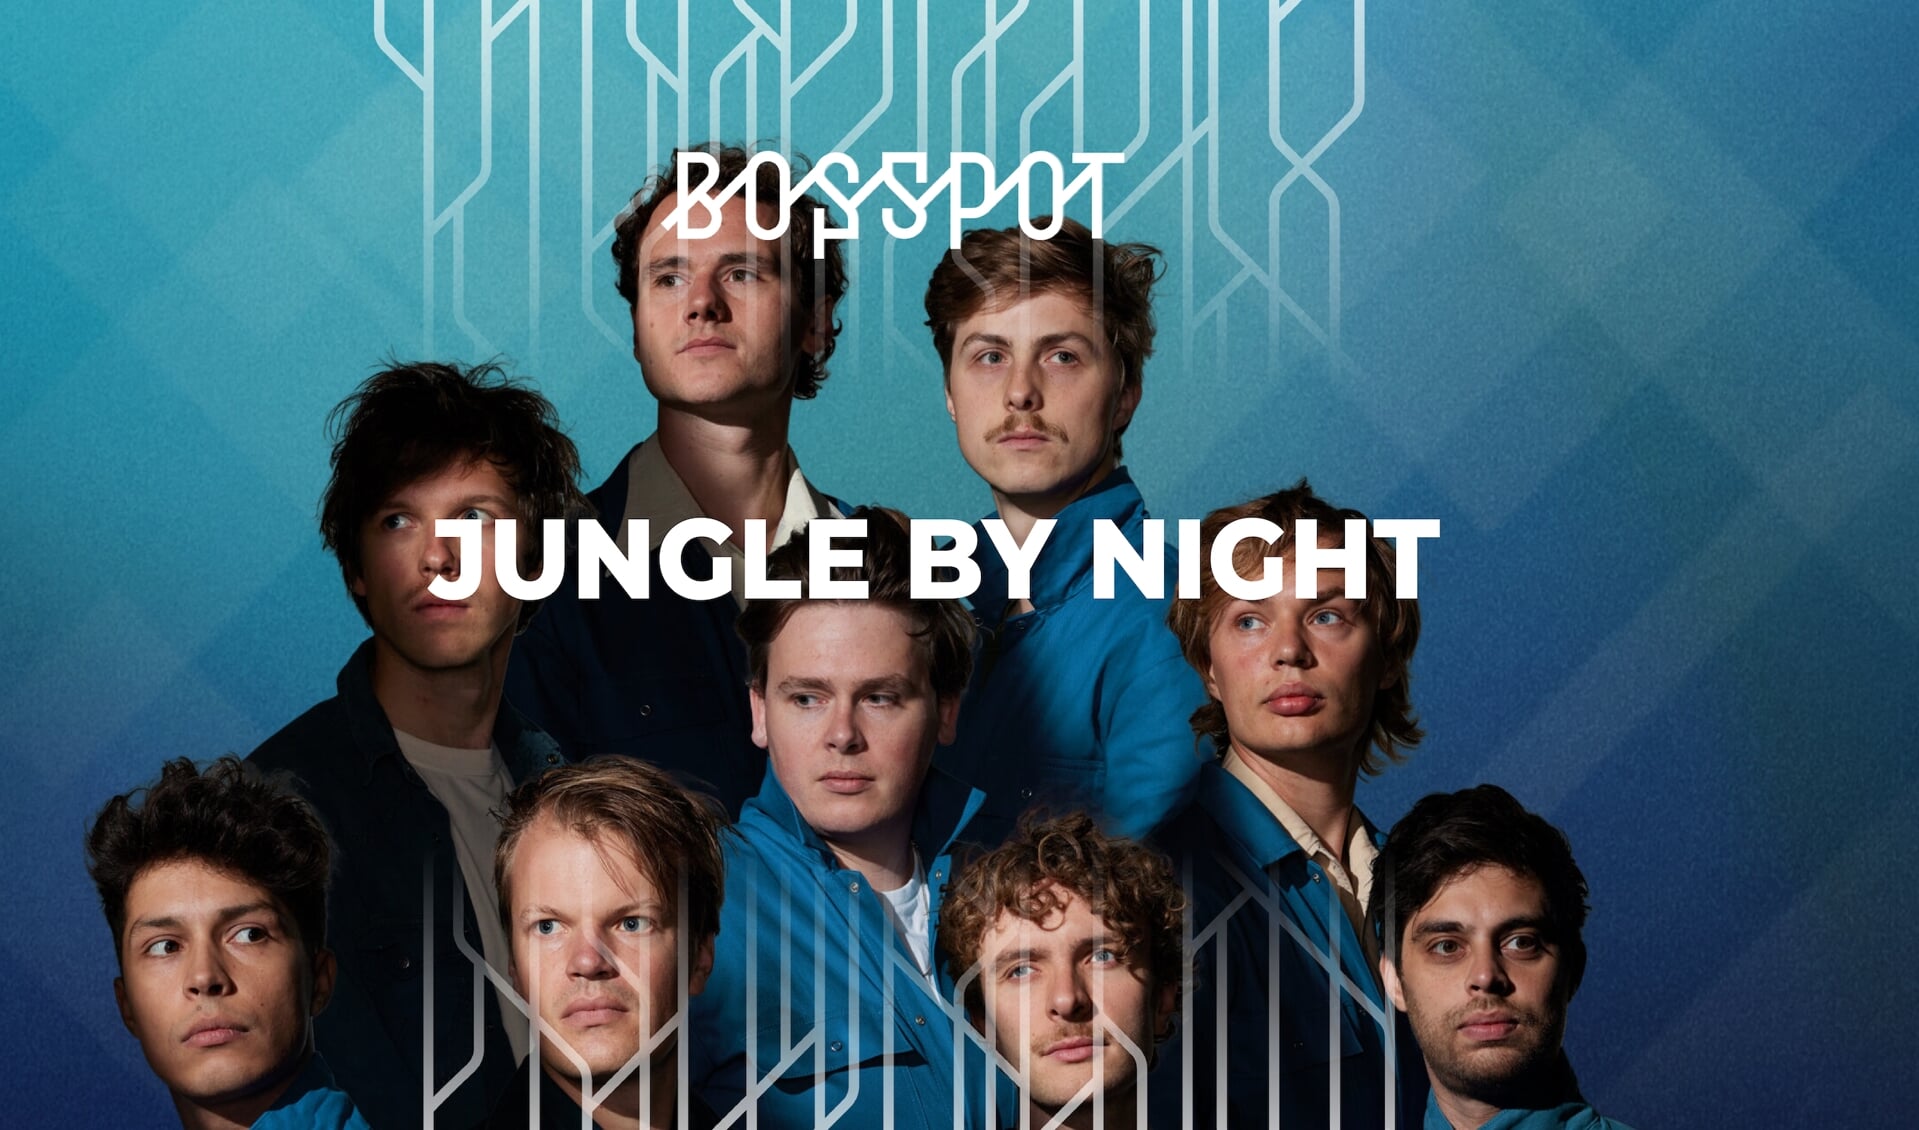 Jungle By Night ? Bosspot Amersfoort